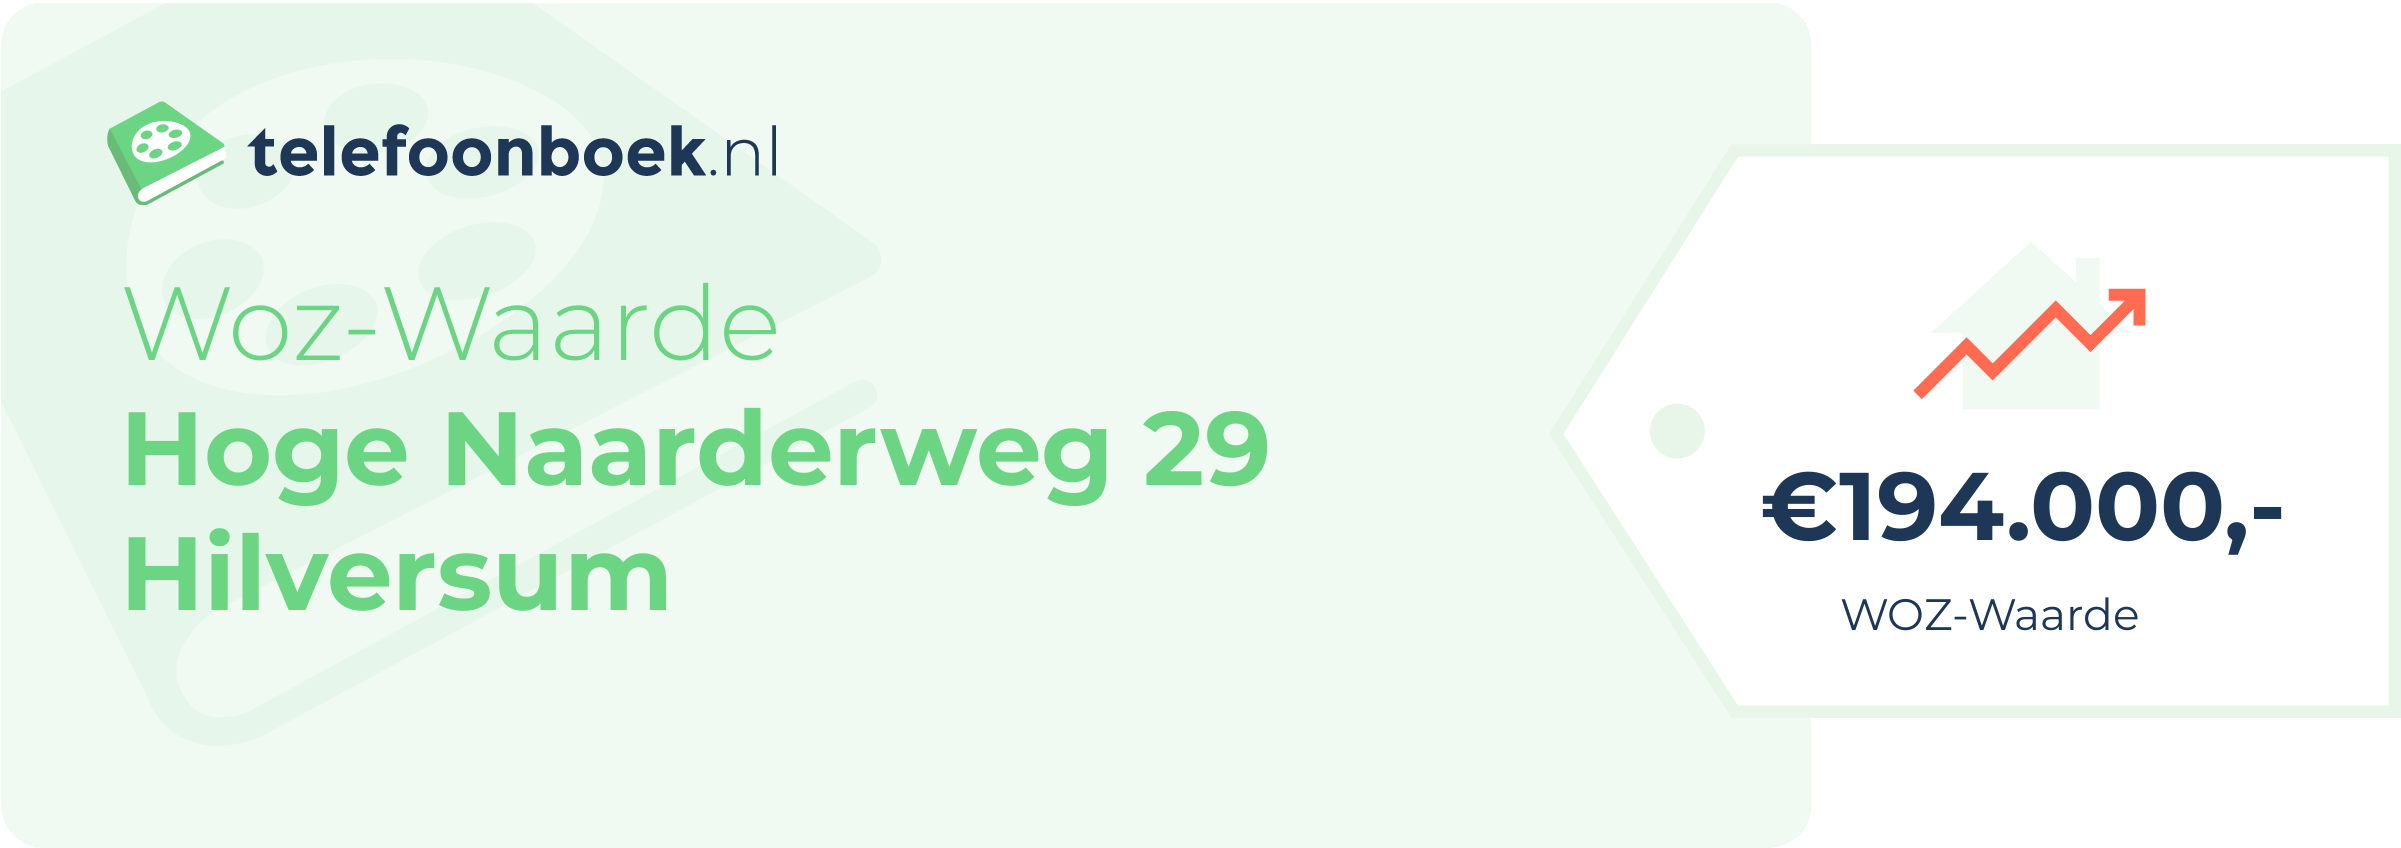 WOZ-waarde Hoge Naarderweg 29 Hilversum